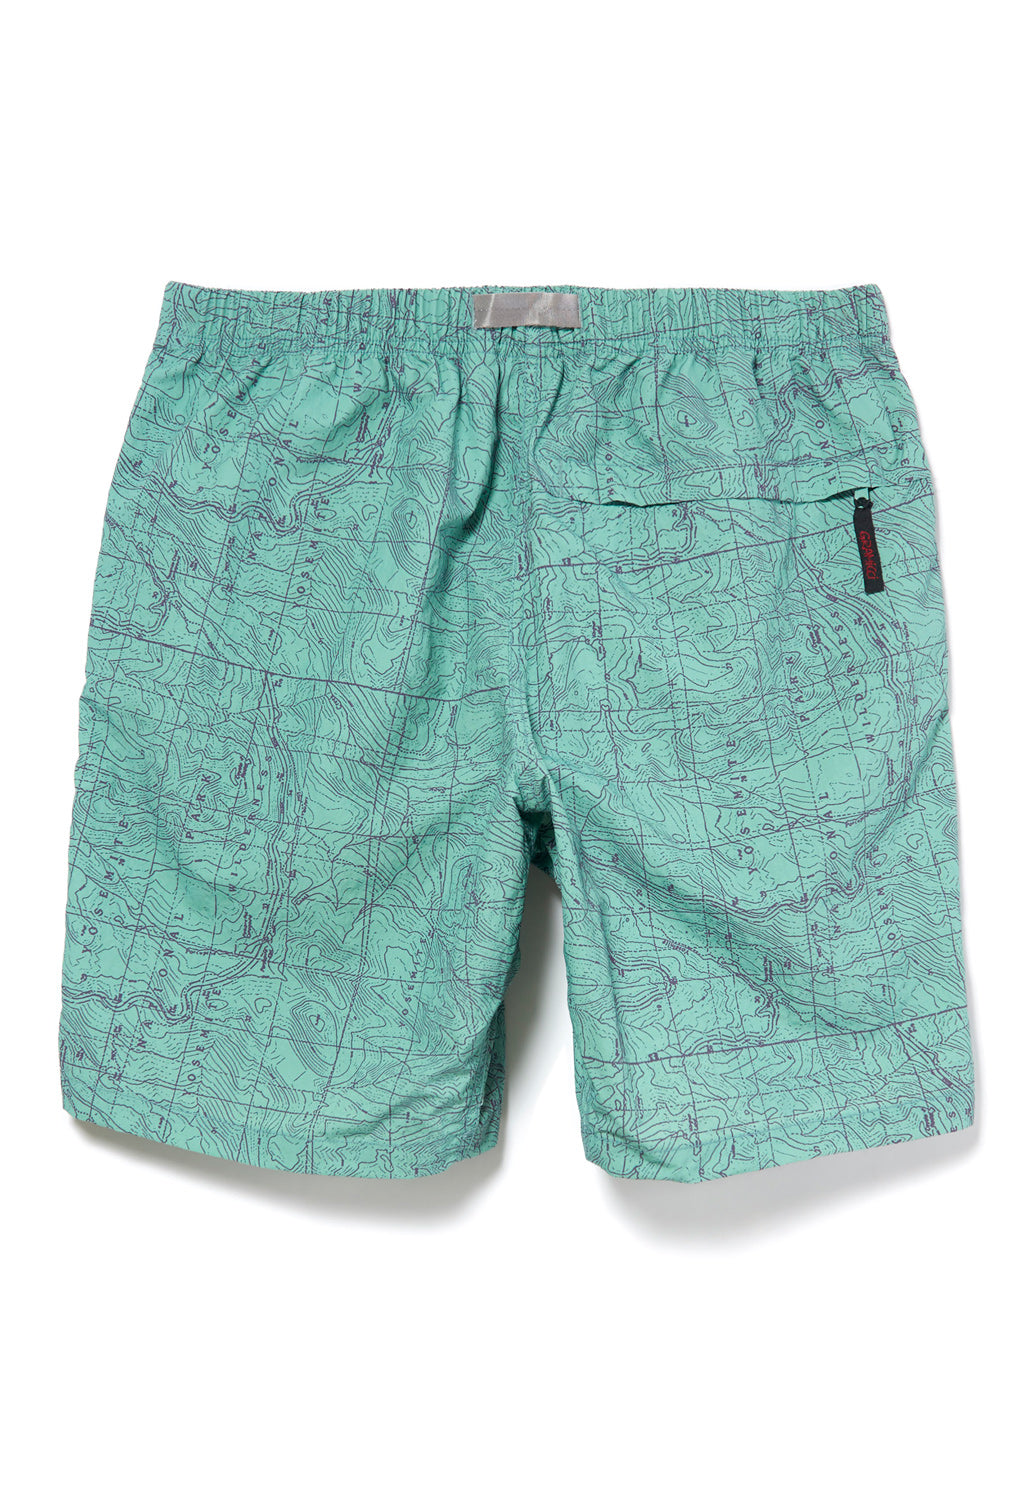 Gramicci Men's Nylon Alpine Packable Shorts - Yosemite Green